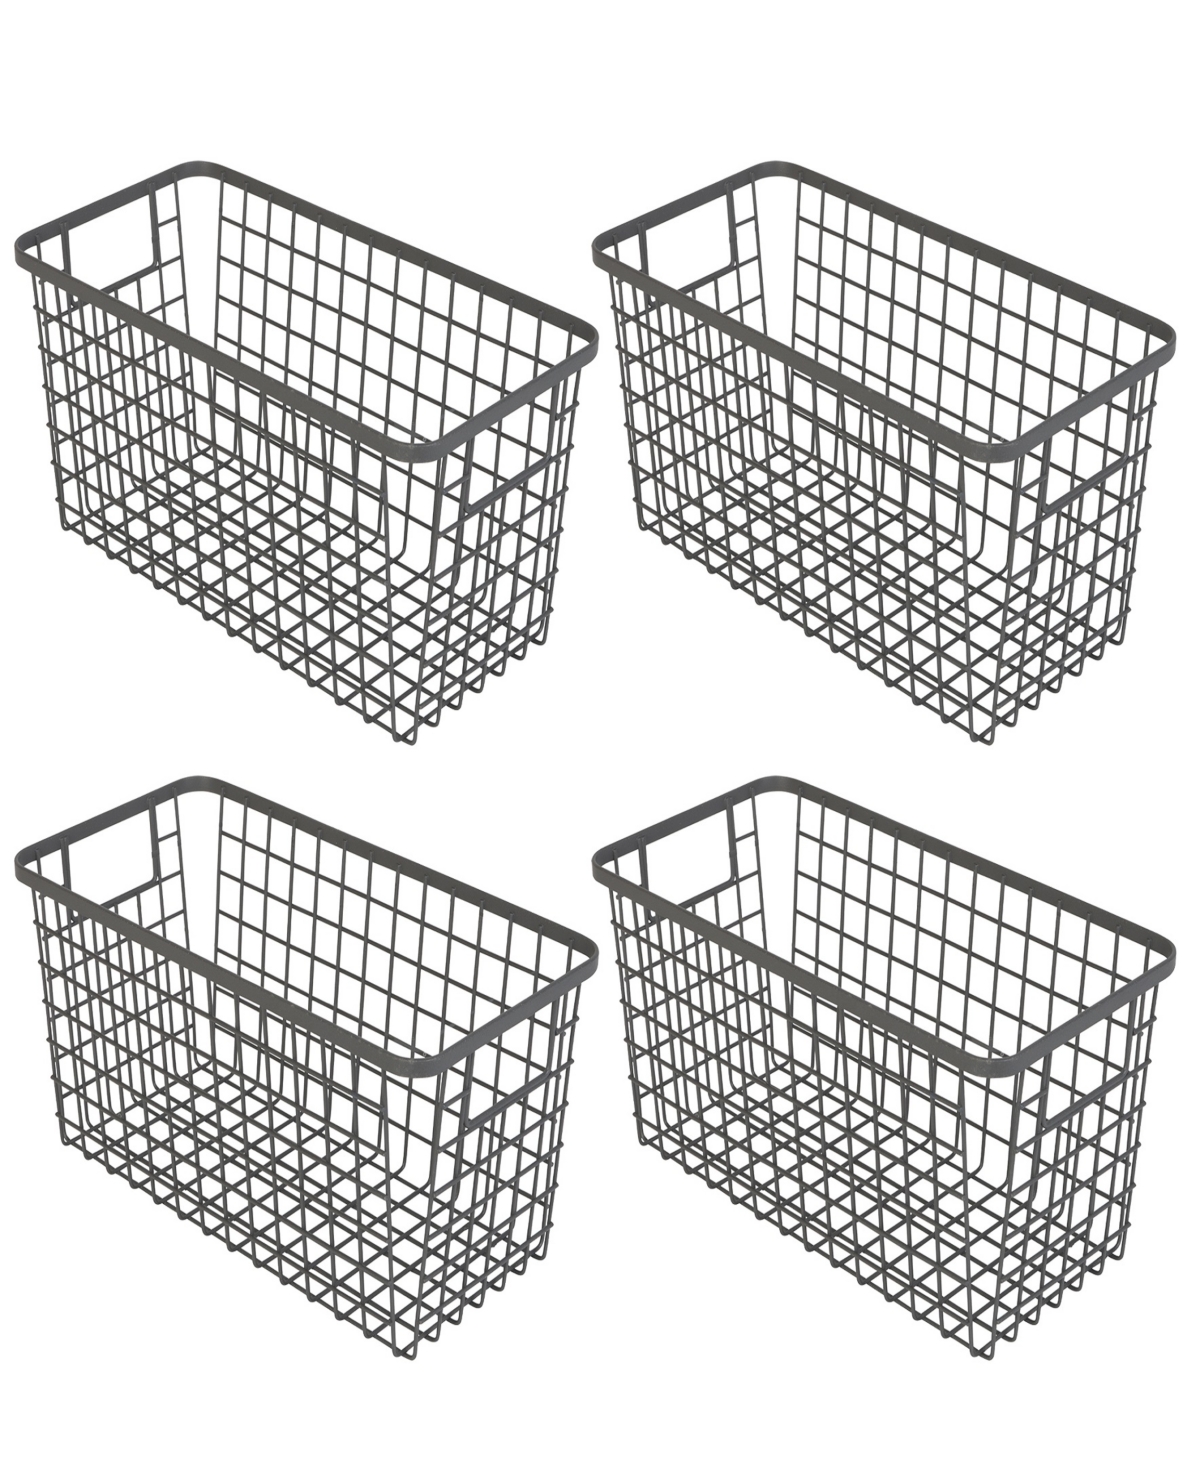 Nestable 6" x 12" x 6" Basket Organizer with Handles, Set of 4 - Gunmetal